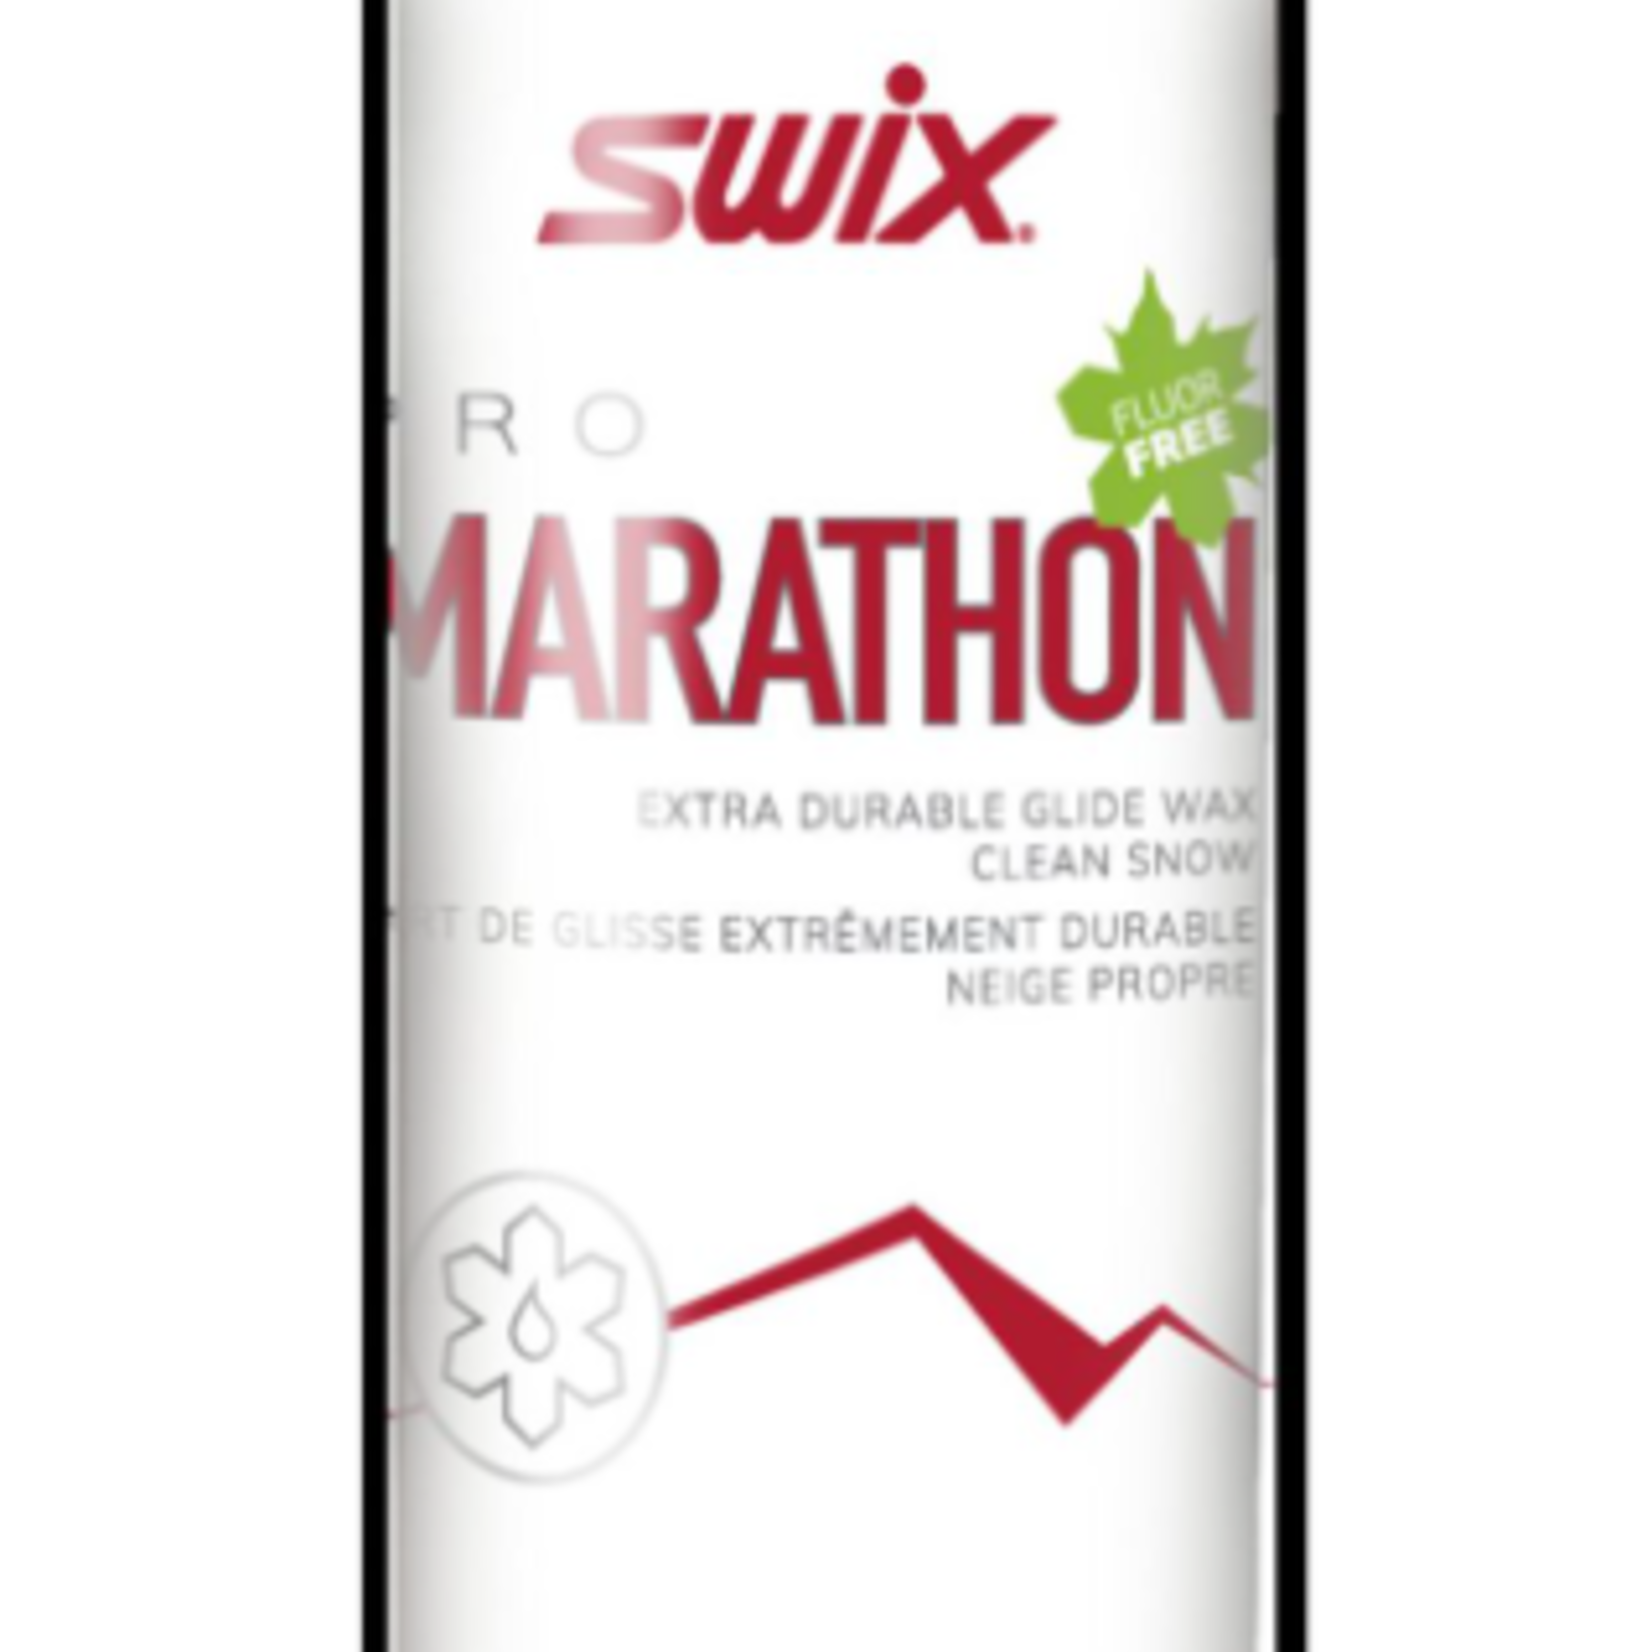 SWIX Marathon Powder White, 40 gr